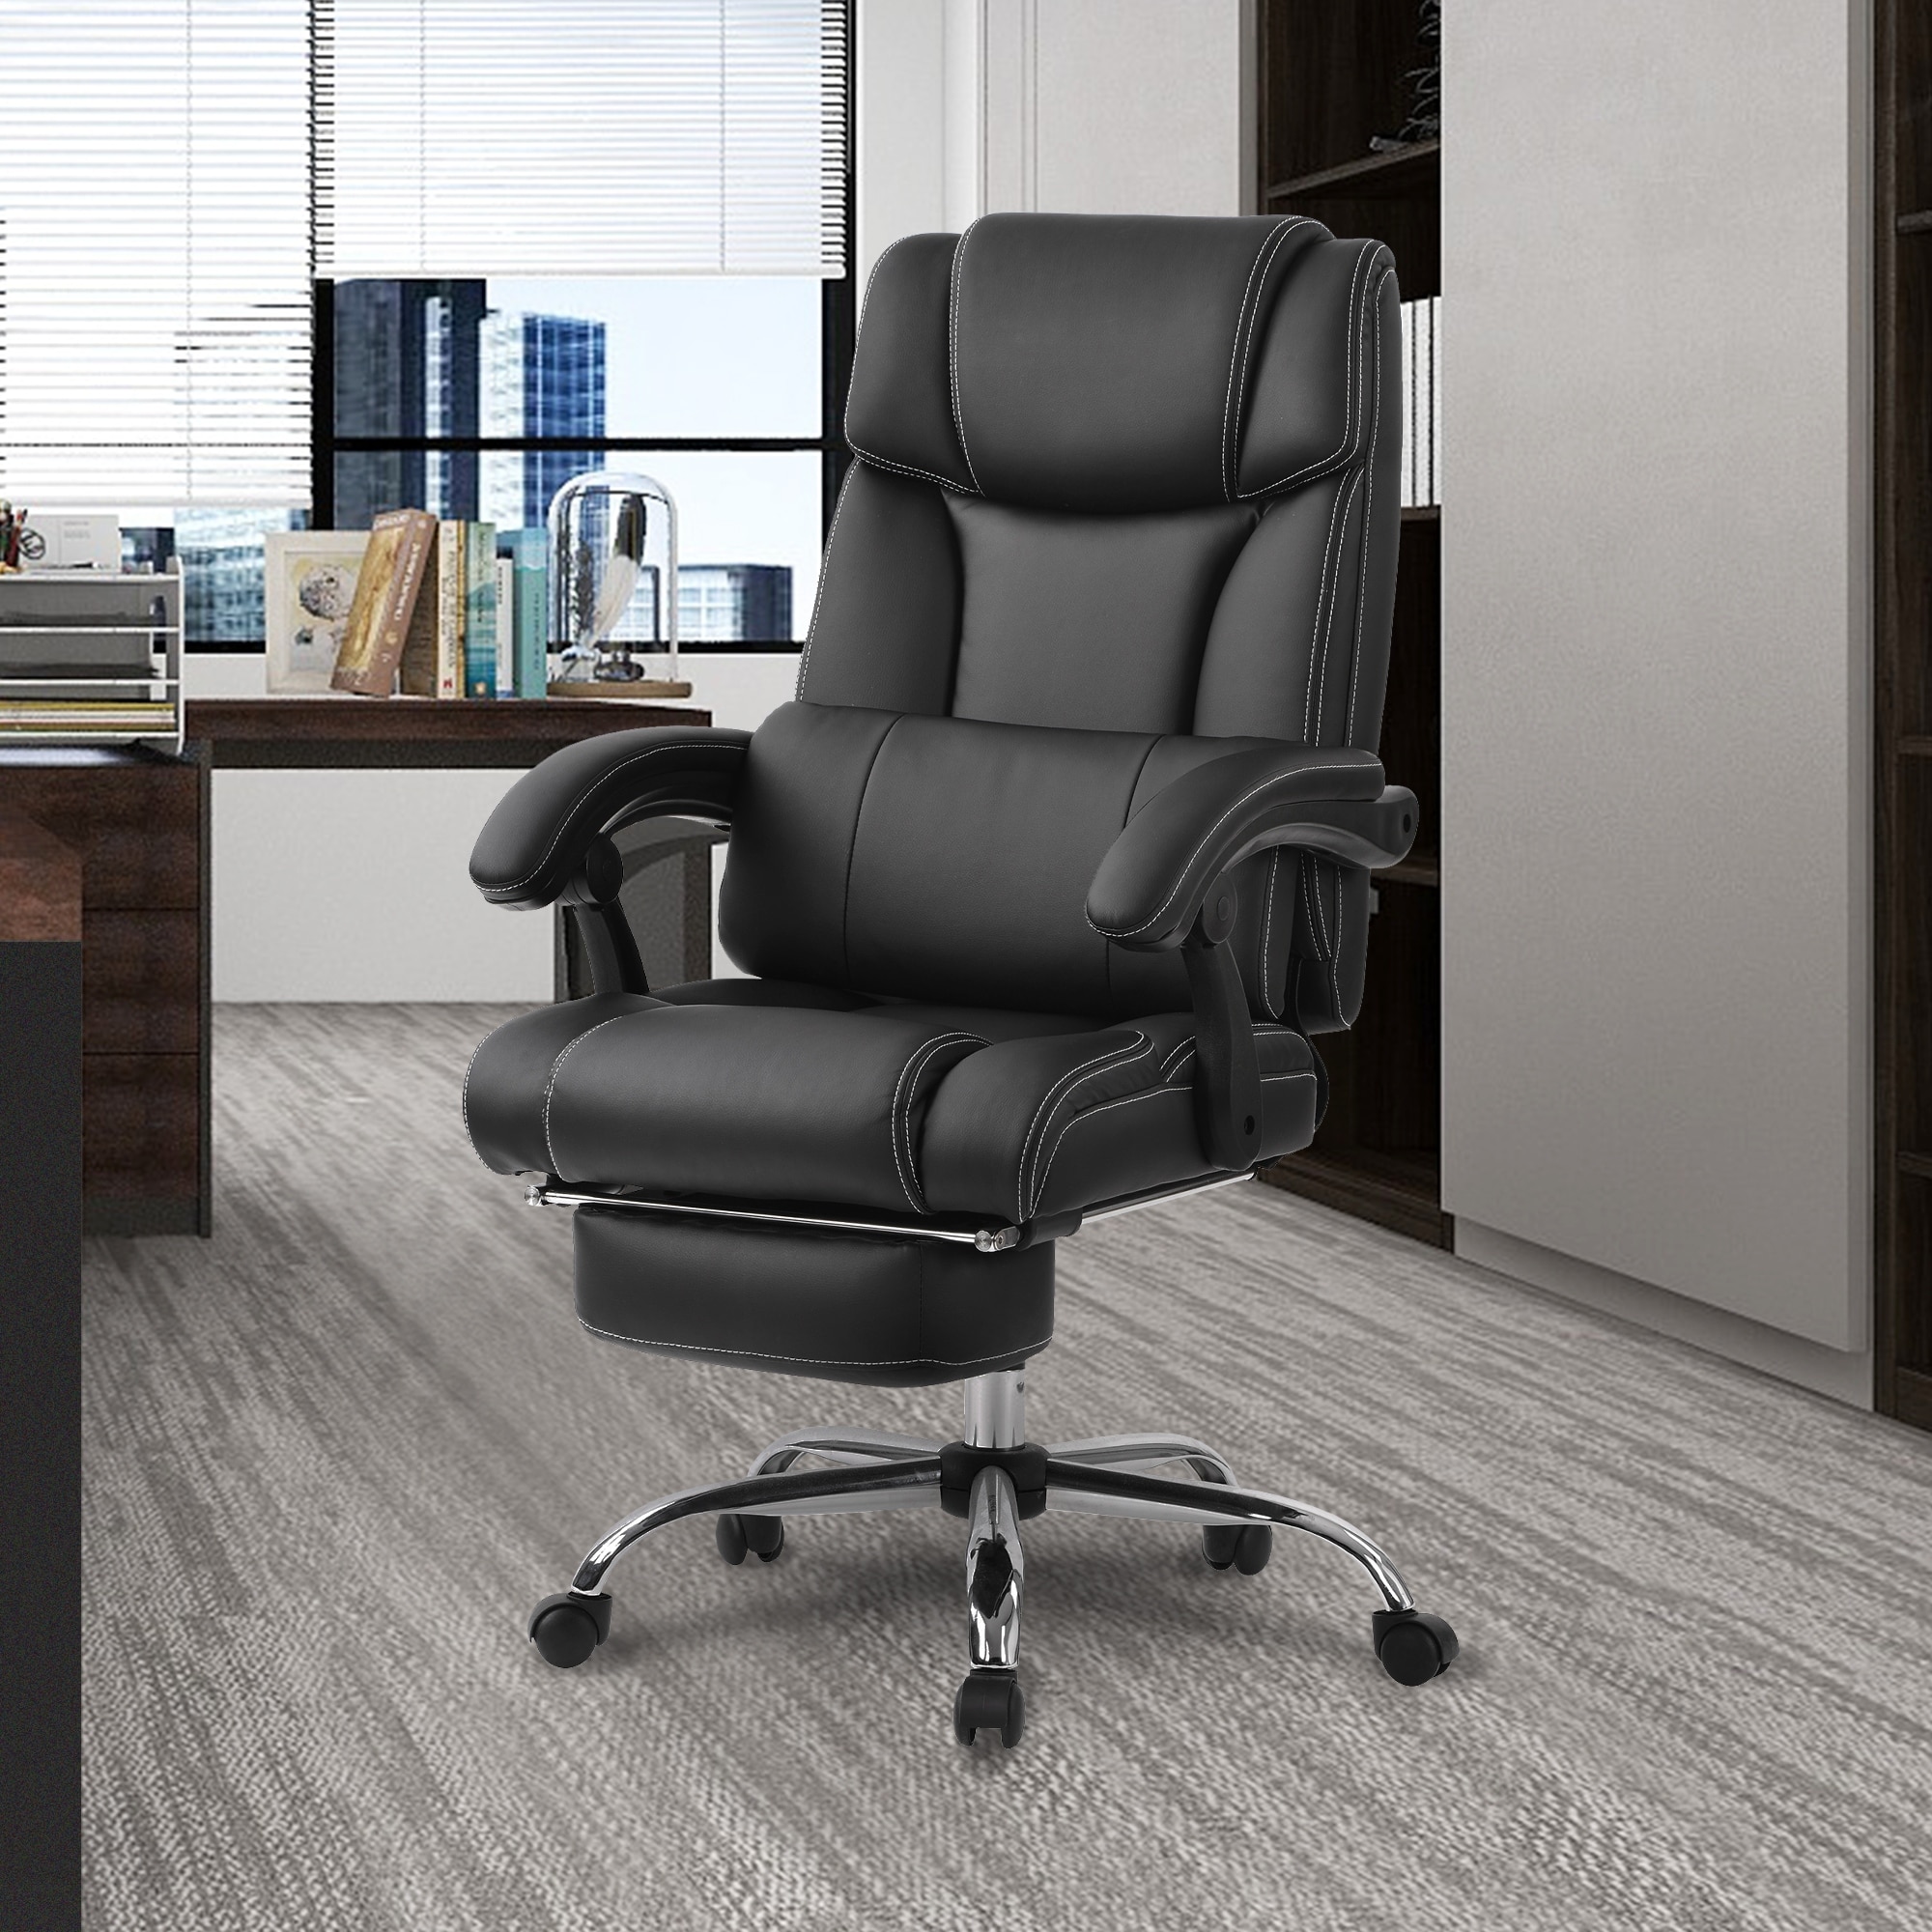 Ergonomic Chair Swivel Chair Executive Adjustable Recliner Desk Chair